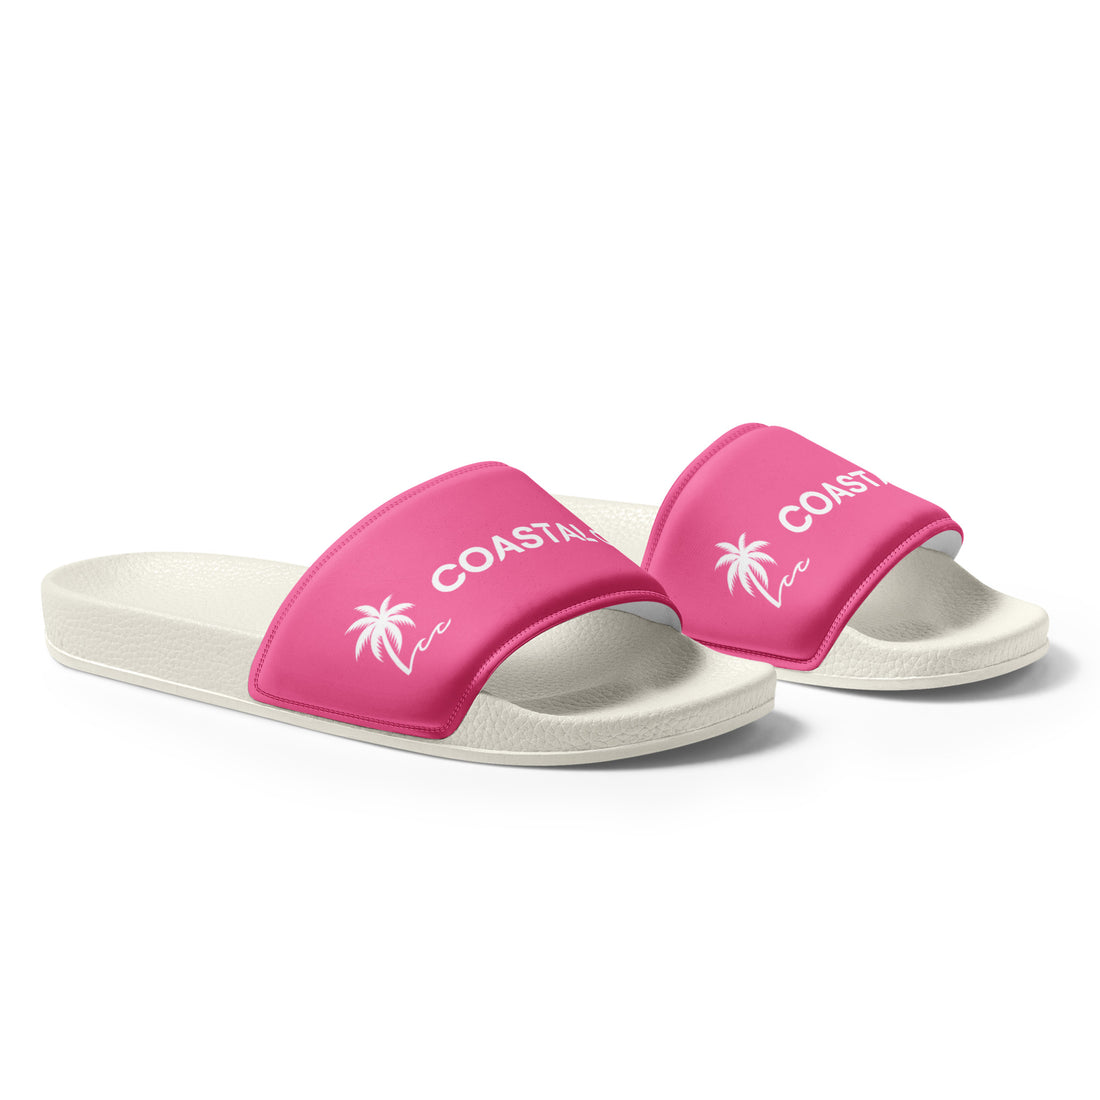 Men's Slides - Pink - Coastal Cool - Swimwear and Beachwear - Recycled fabrics